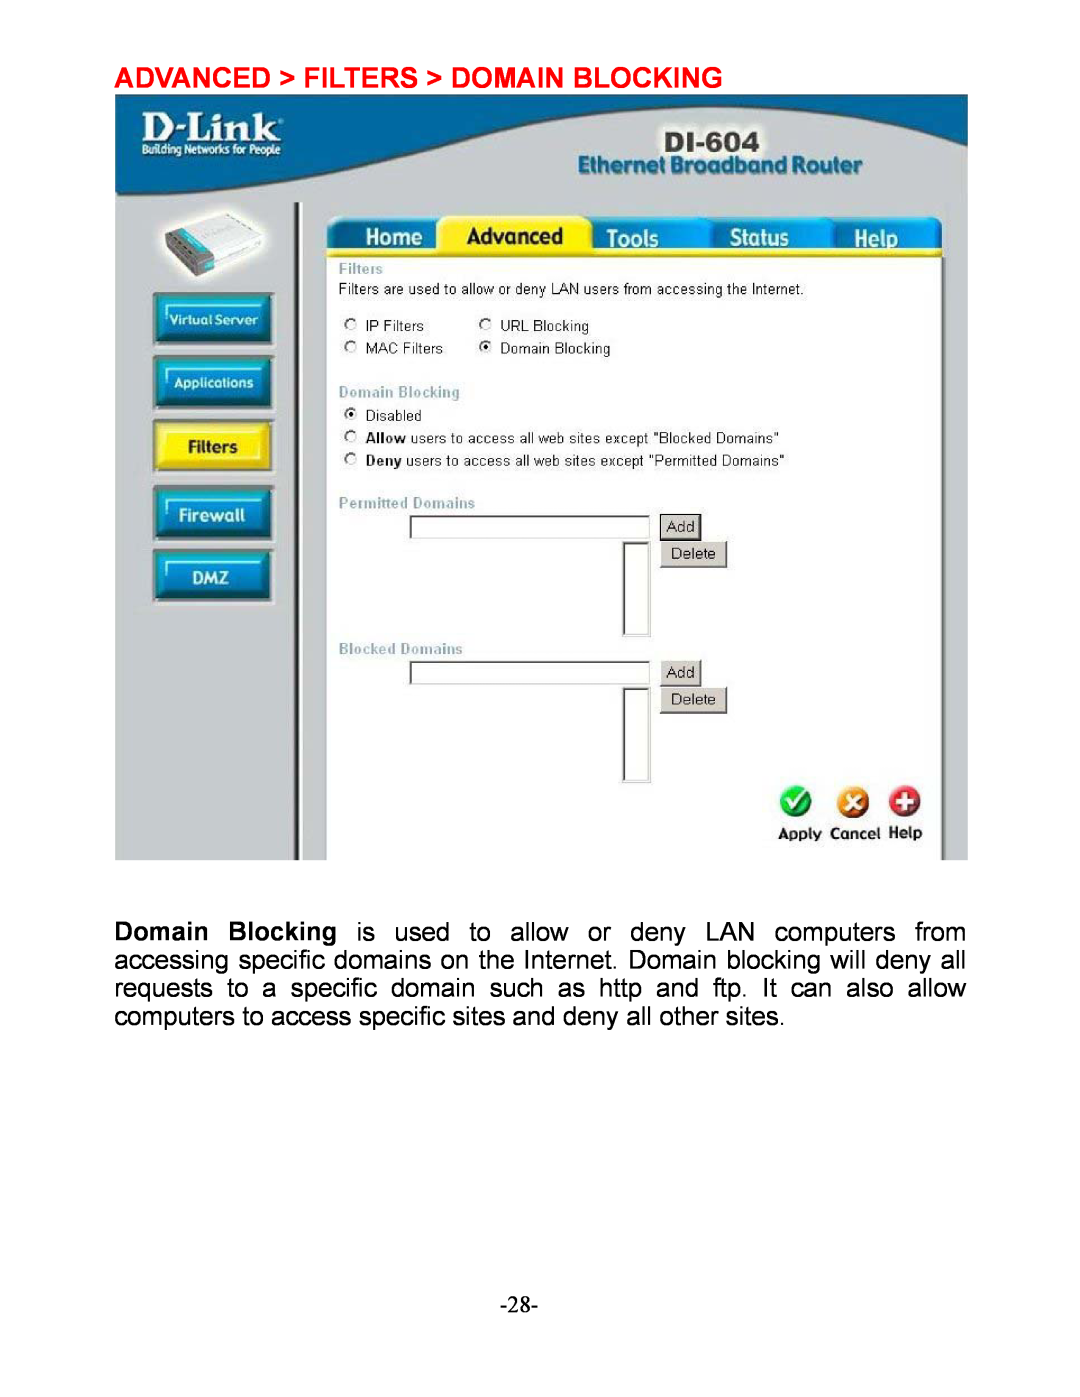 D-Link DI-604 manual Advanced Filters Domain Blocking 